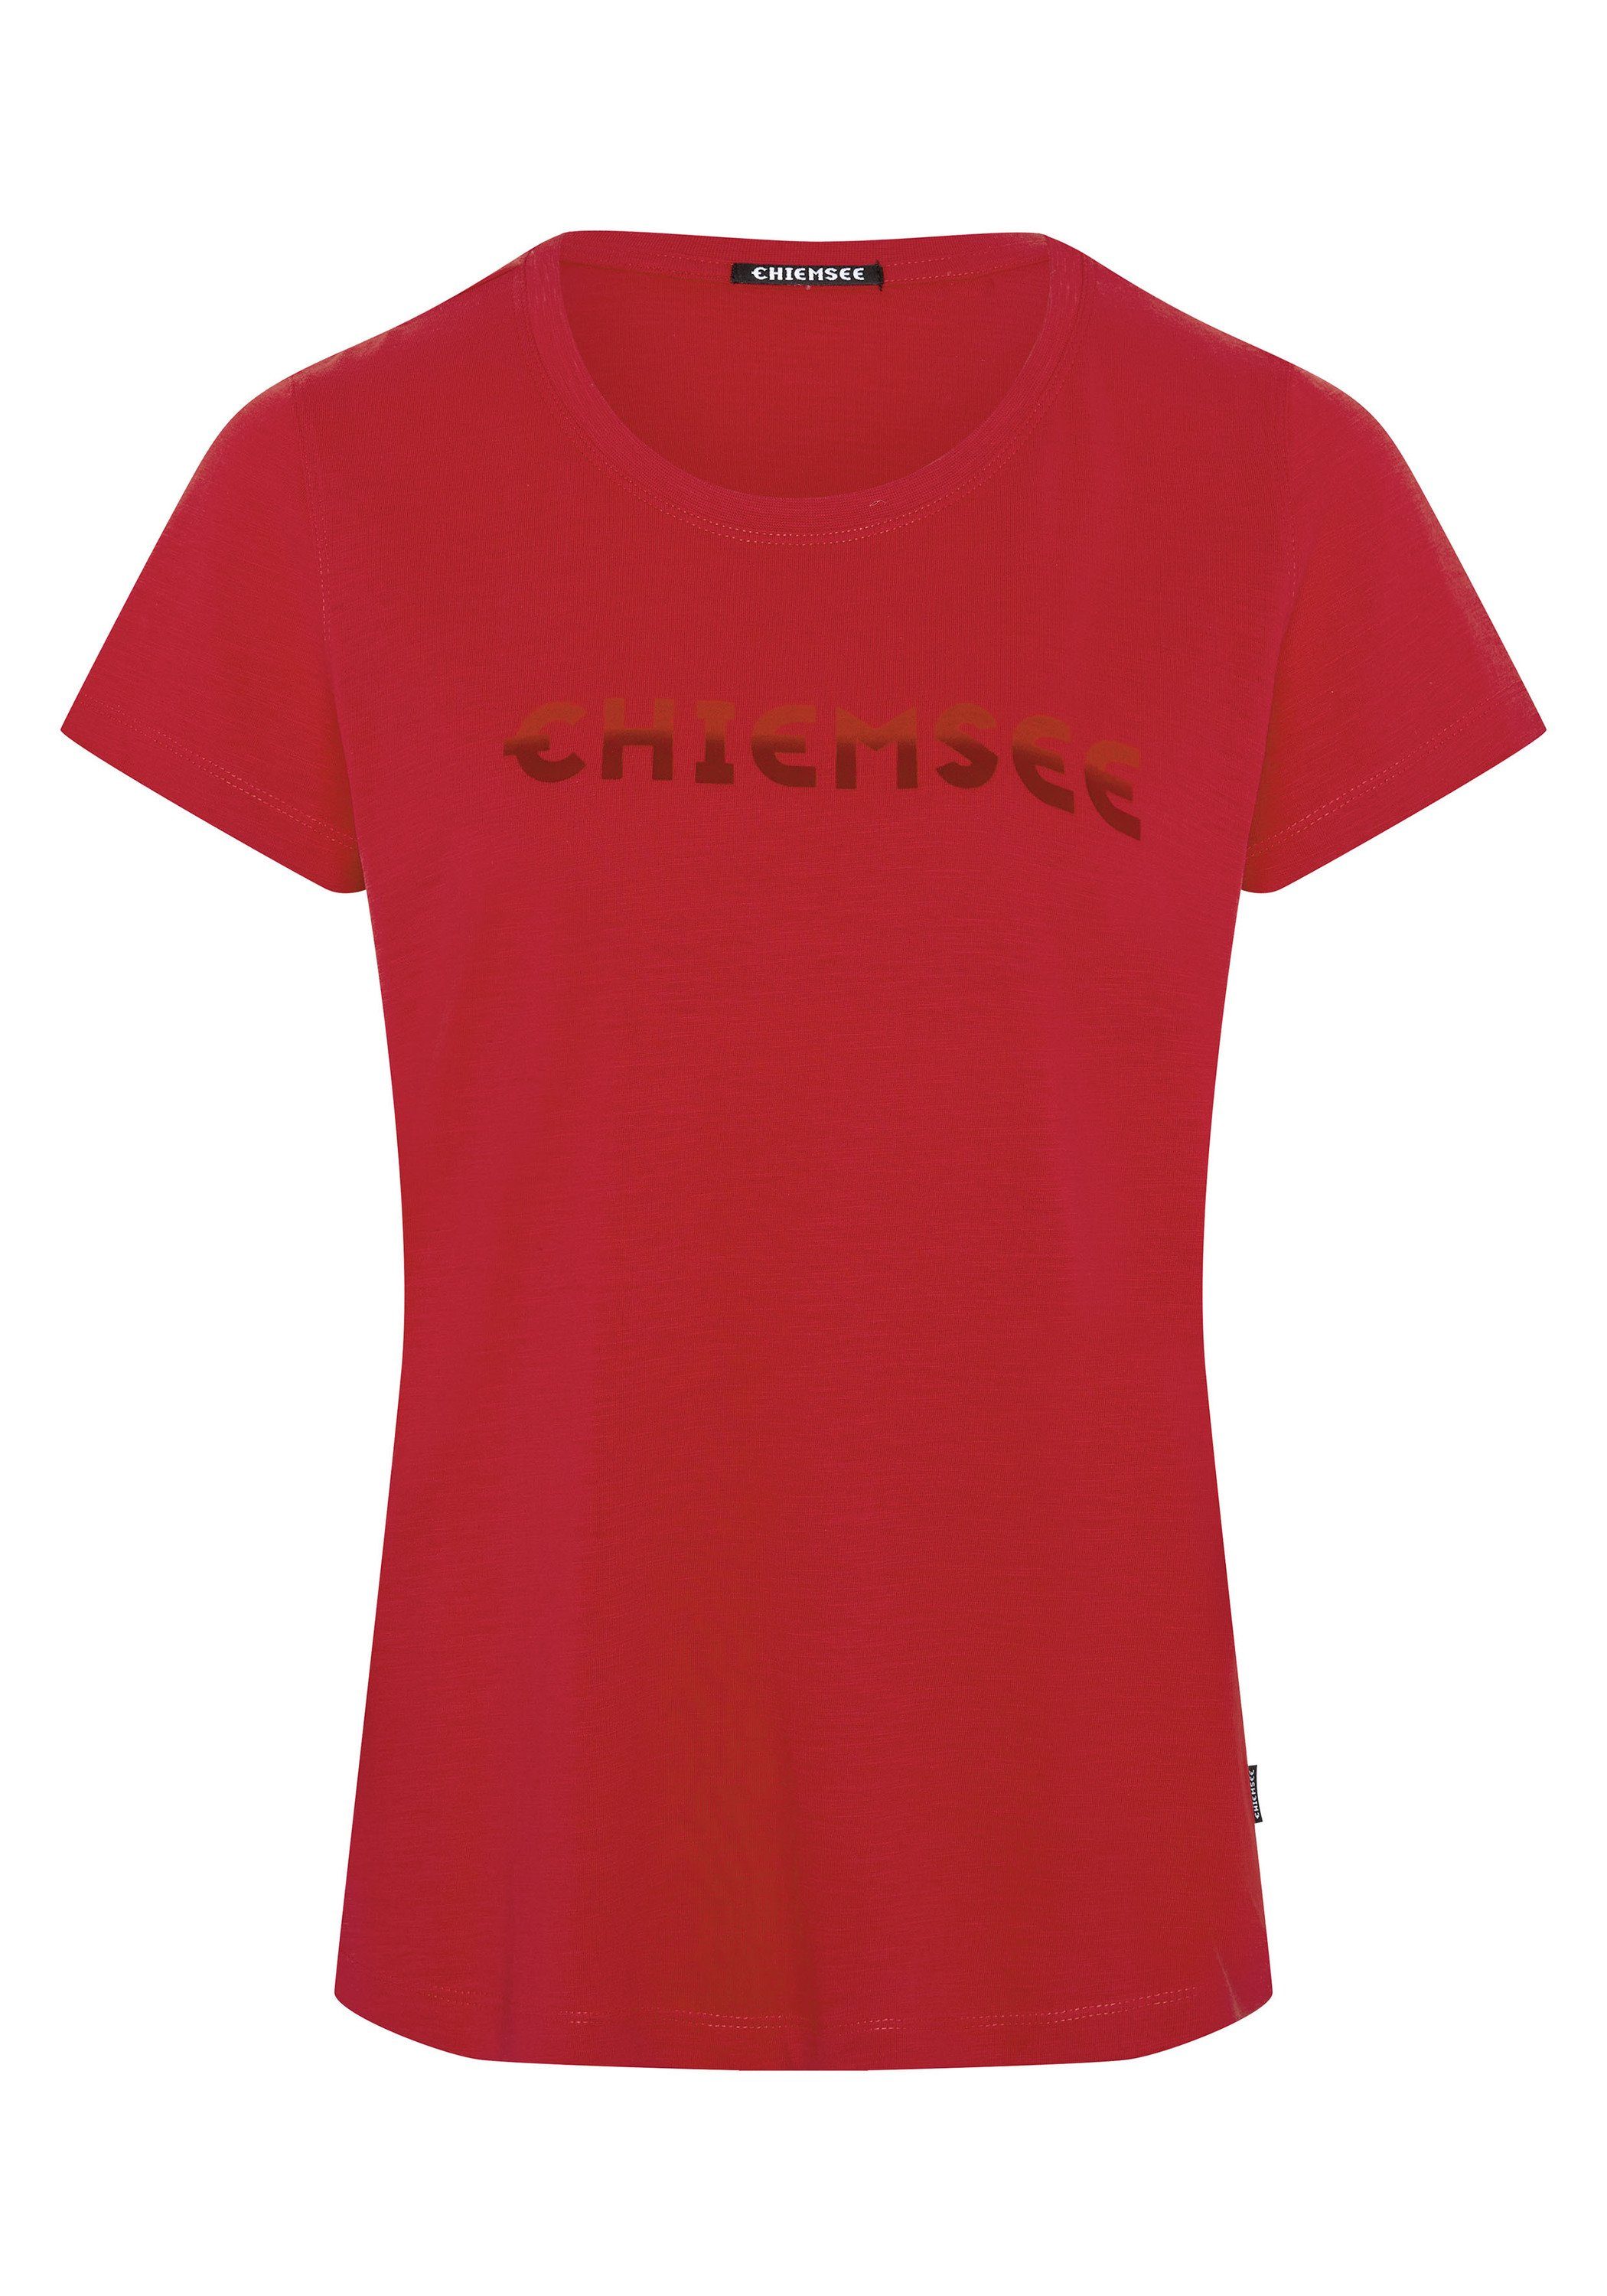 Chiemsee Print-Shirt T-Shirt mit Toreador 1 Logo Farbverlauf-Optik in